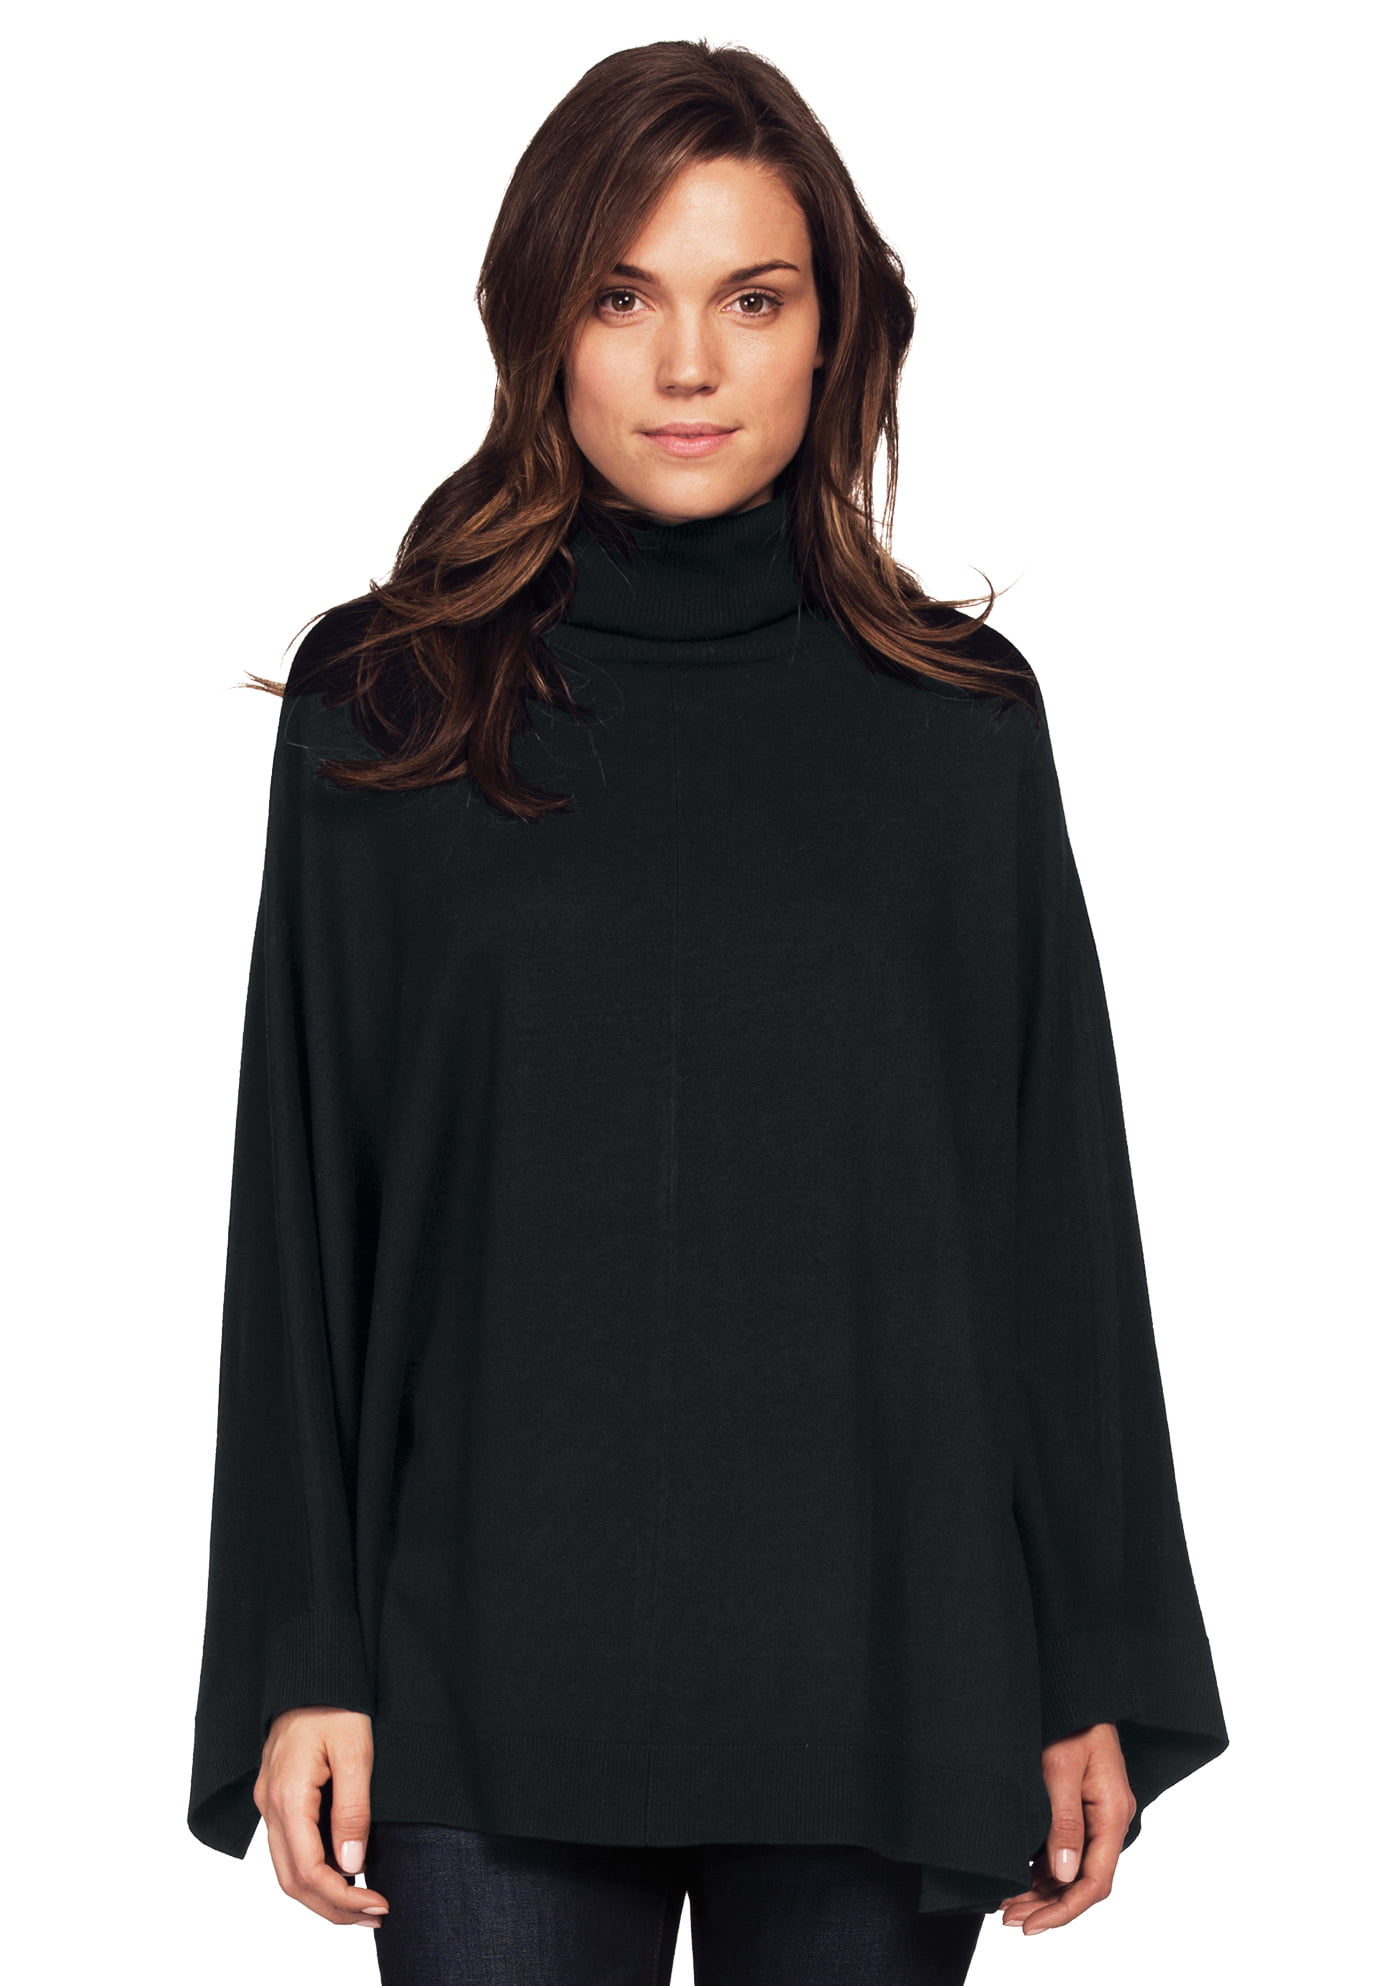 Ellos - Ellos Women's Plus Size Turtleneck Poncho Sweater Pullover